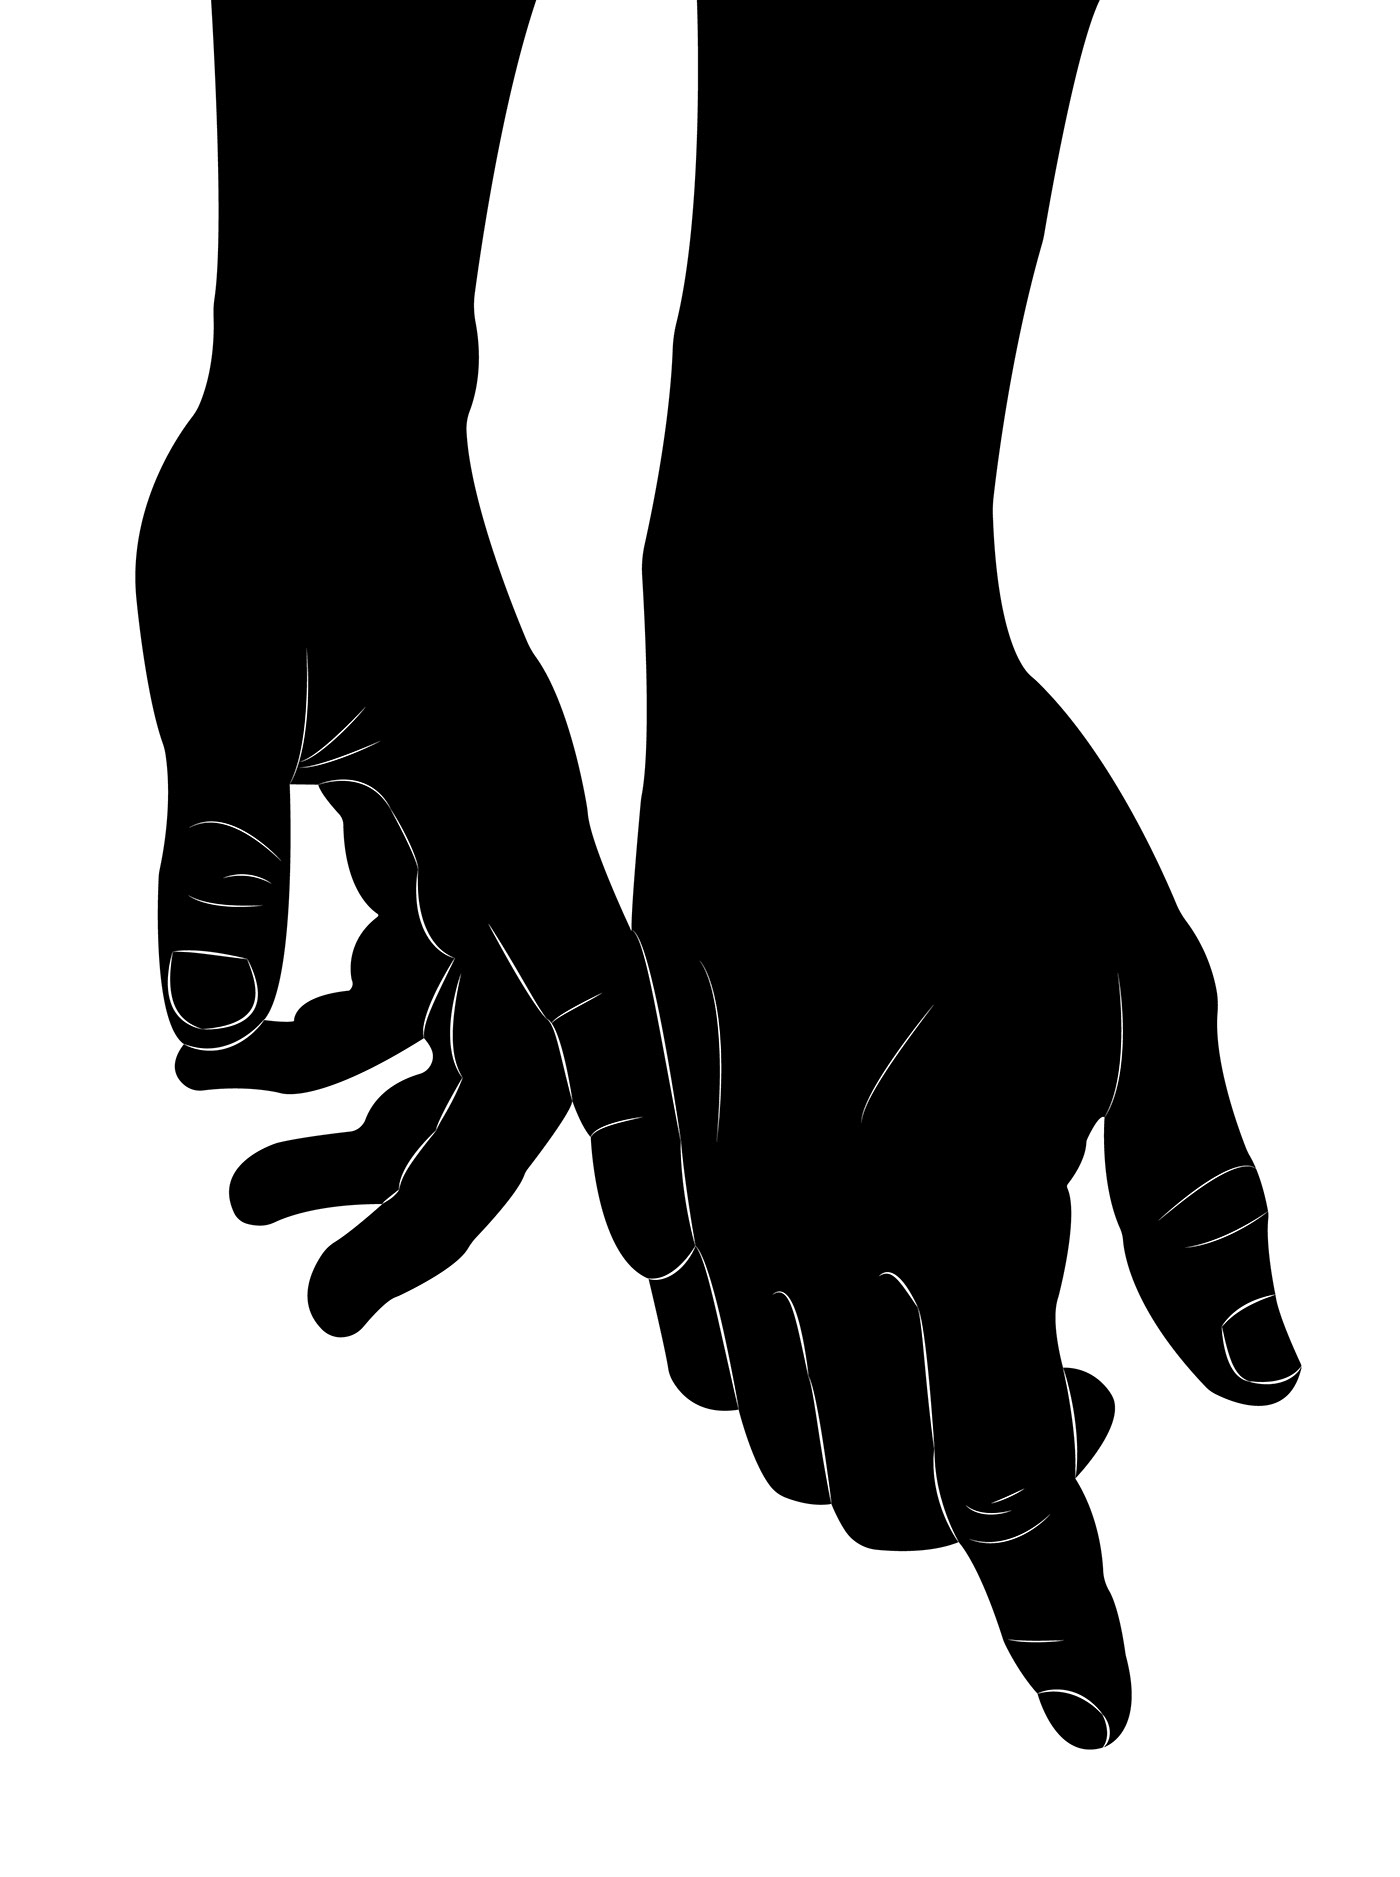 hands holding hands Love couple Digital Art  line art digital illustration black and white adobe illustrator ILLUSTRATION 